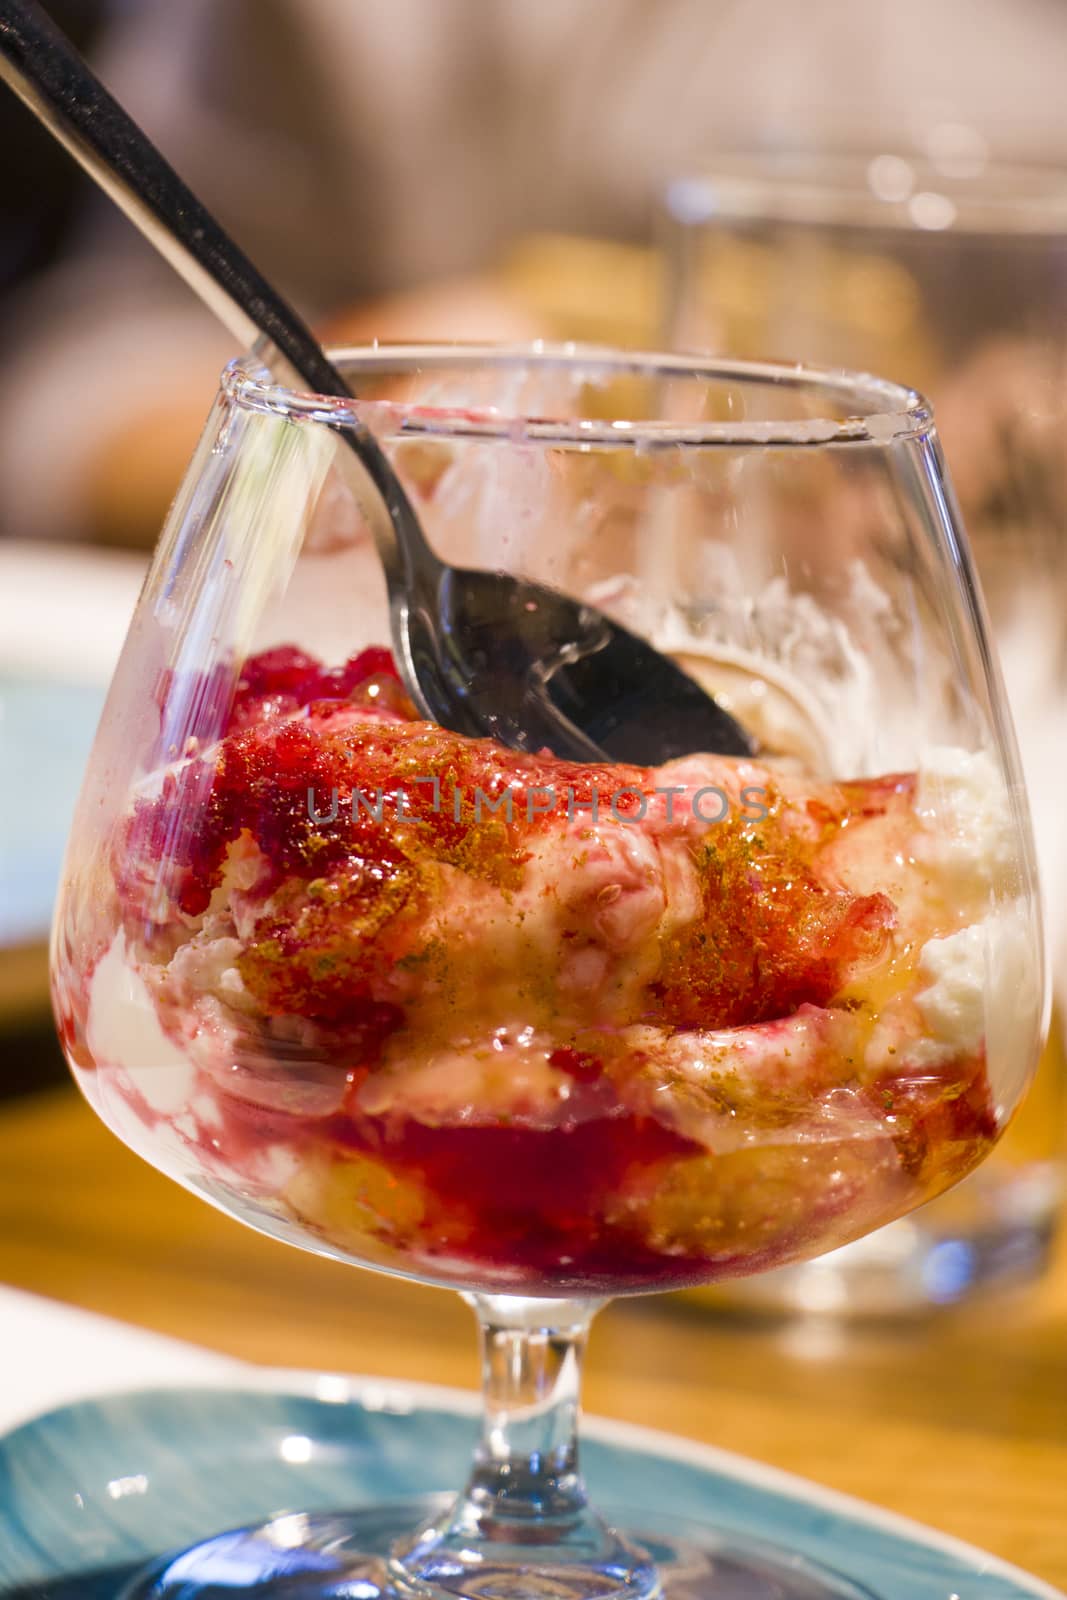 Sweet food dessert in glass with jam and greek yoghurt.